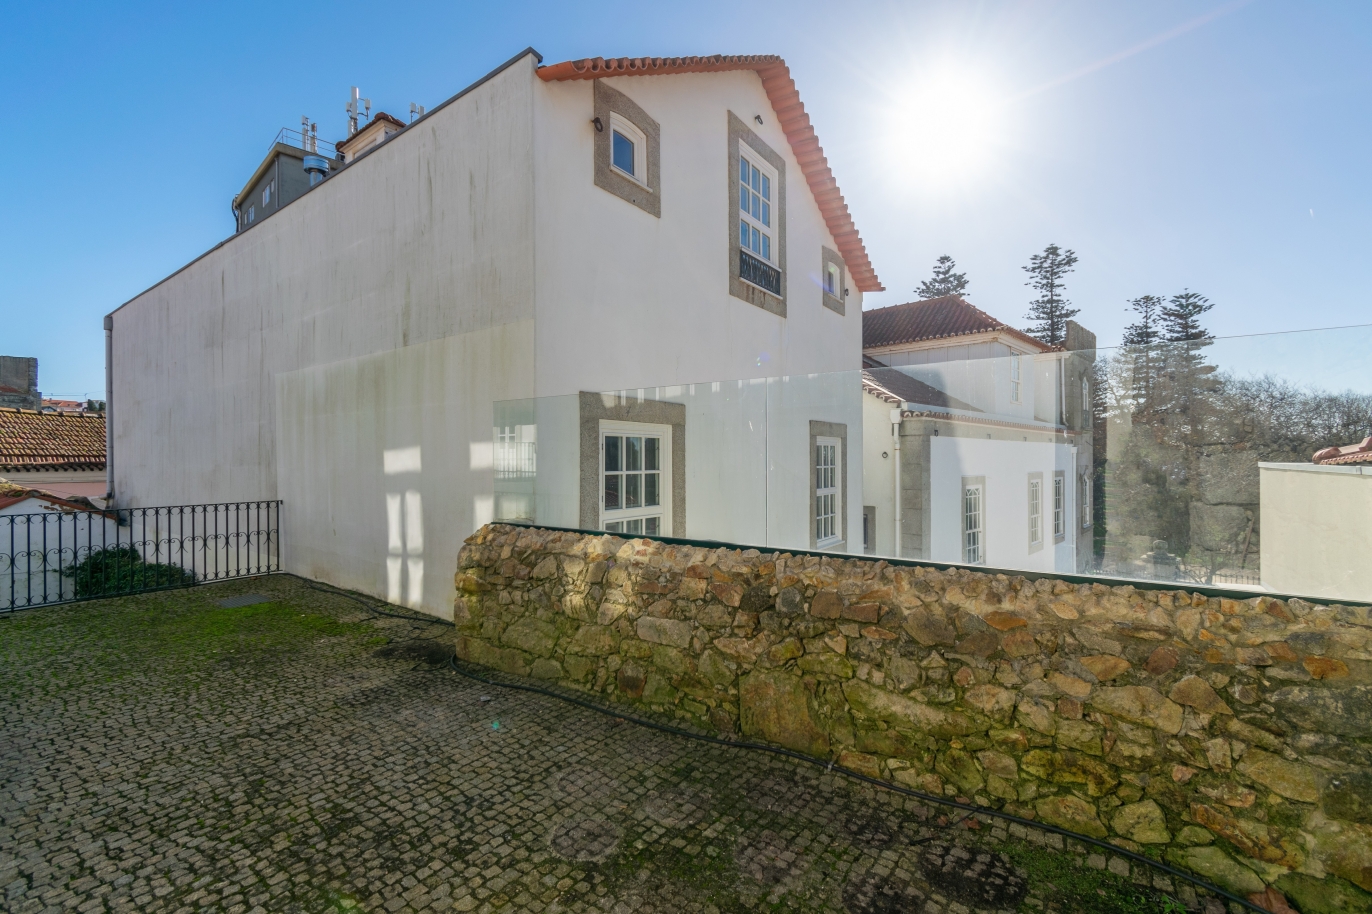 Fantastique villa rénovée à vendre à Foz Velha, Porto, Portugal_246619